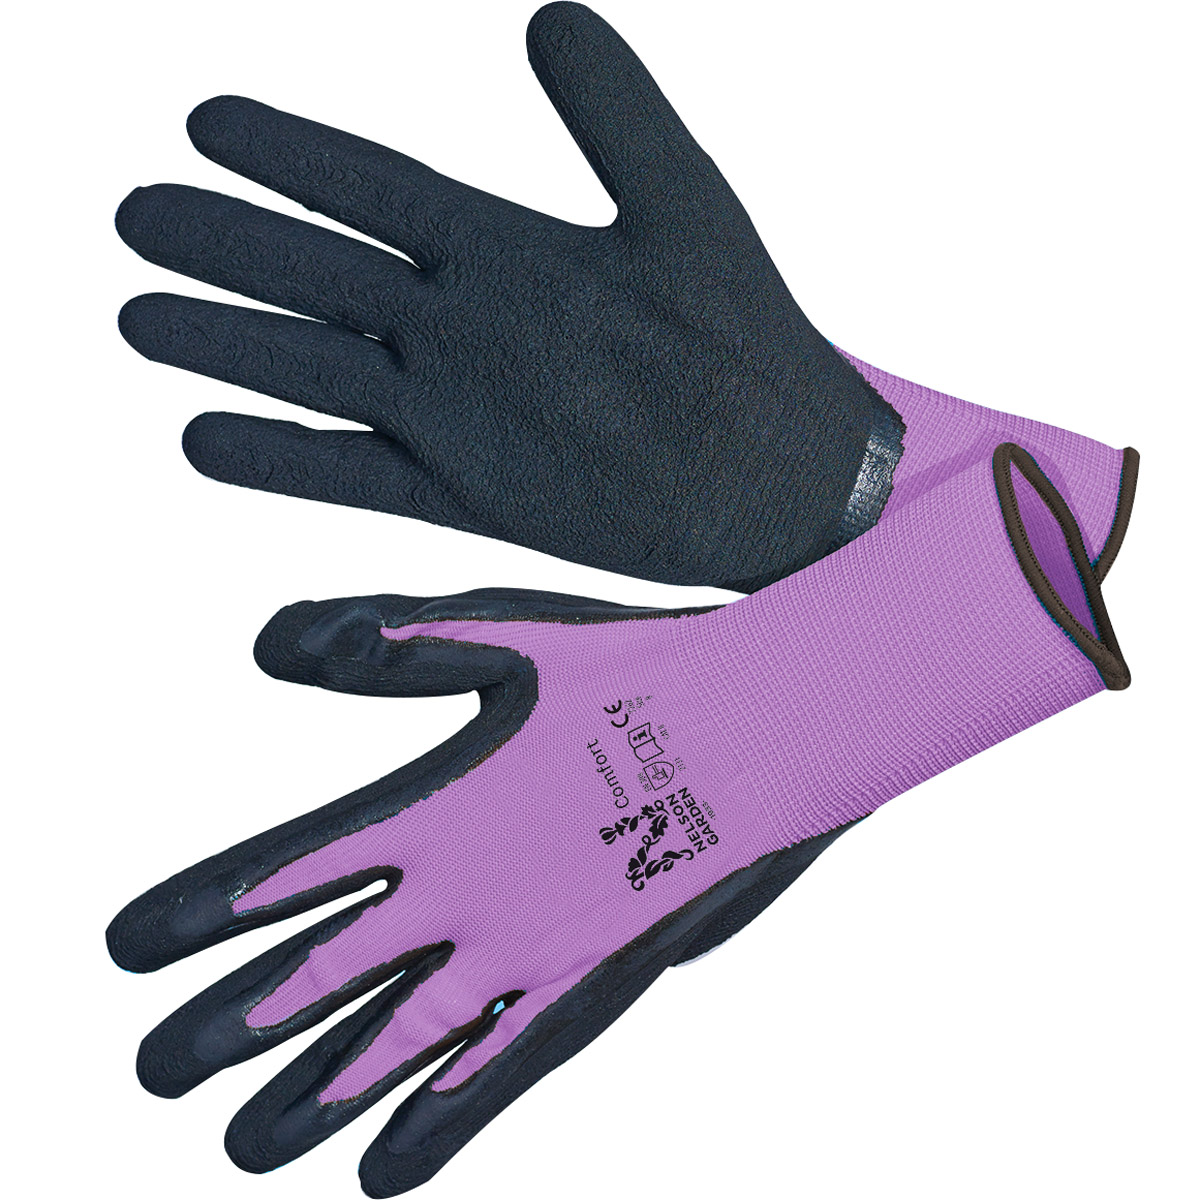 Handske Comfort, storlek 6 violett/svart